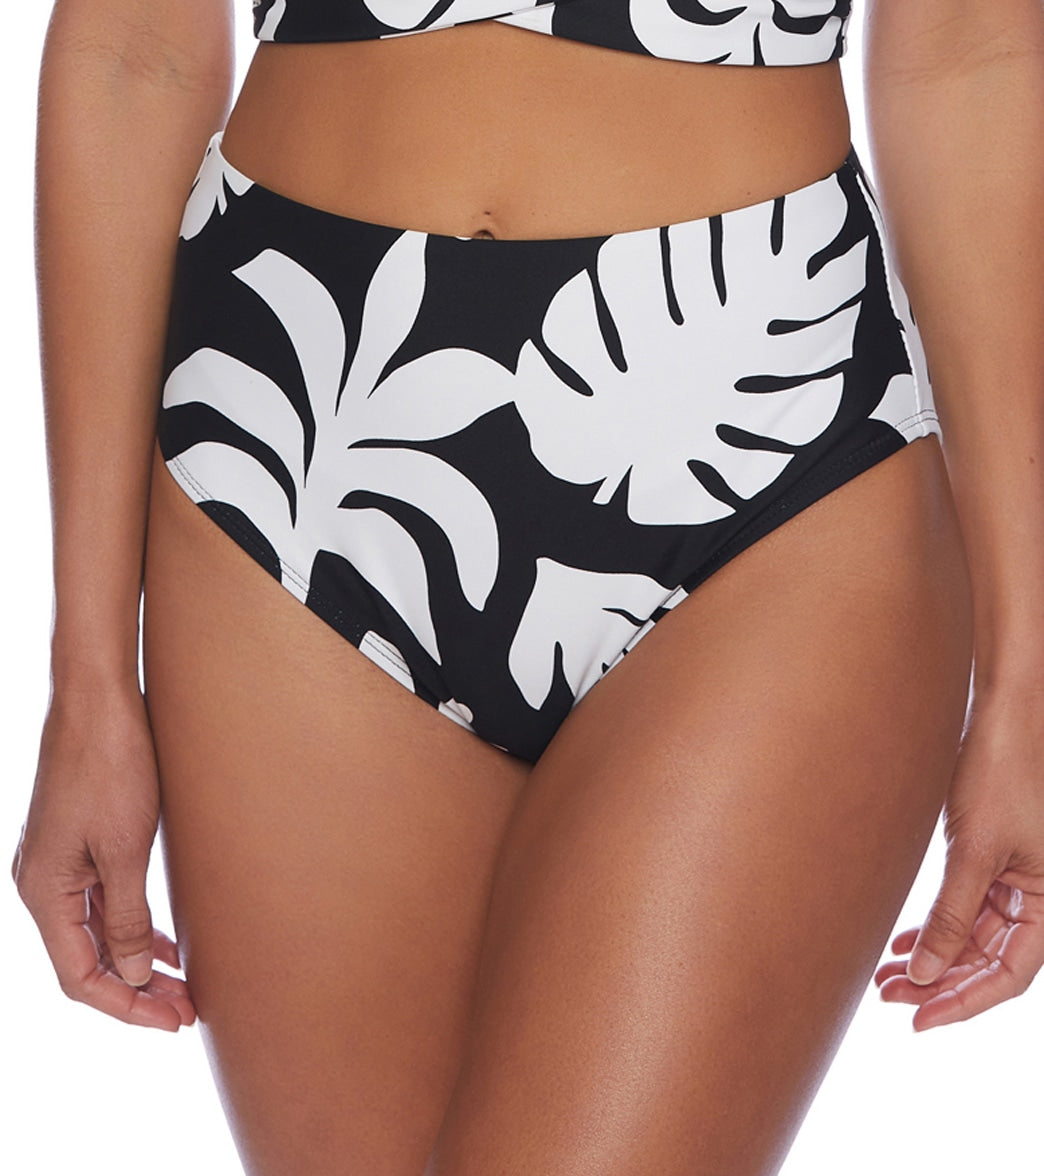 Next by Athena Women's Mondrian High Waist Bikini Bottom at SwimOutlet.com